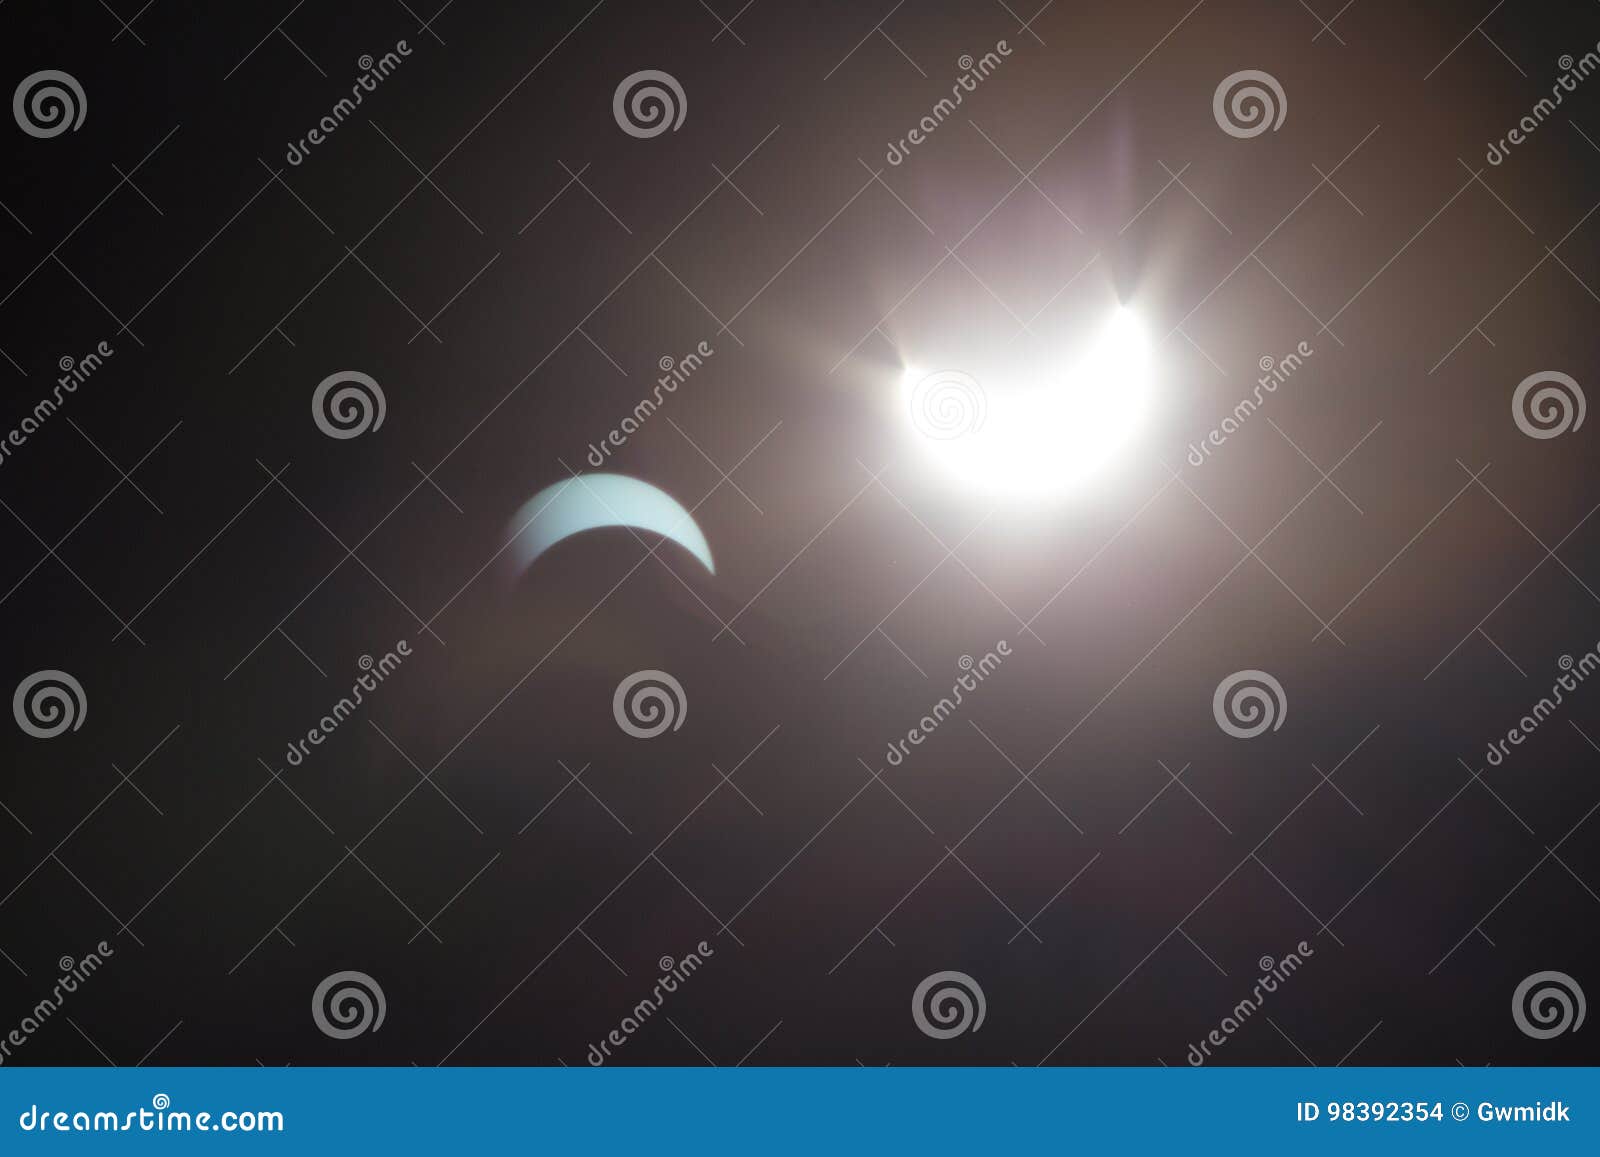 partial solare eclipse over dallas texas